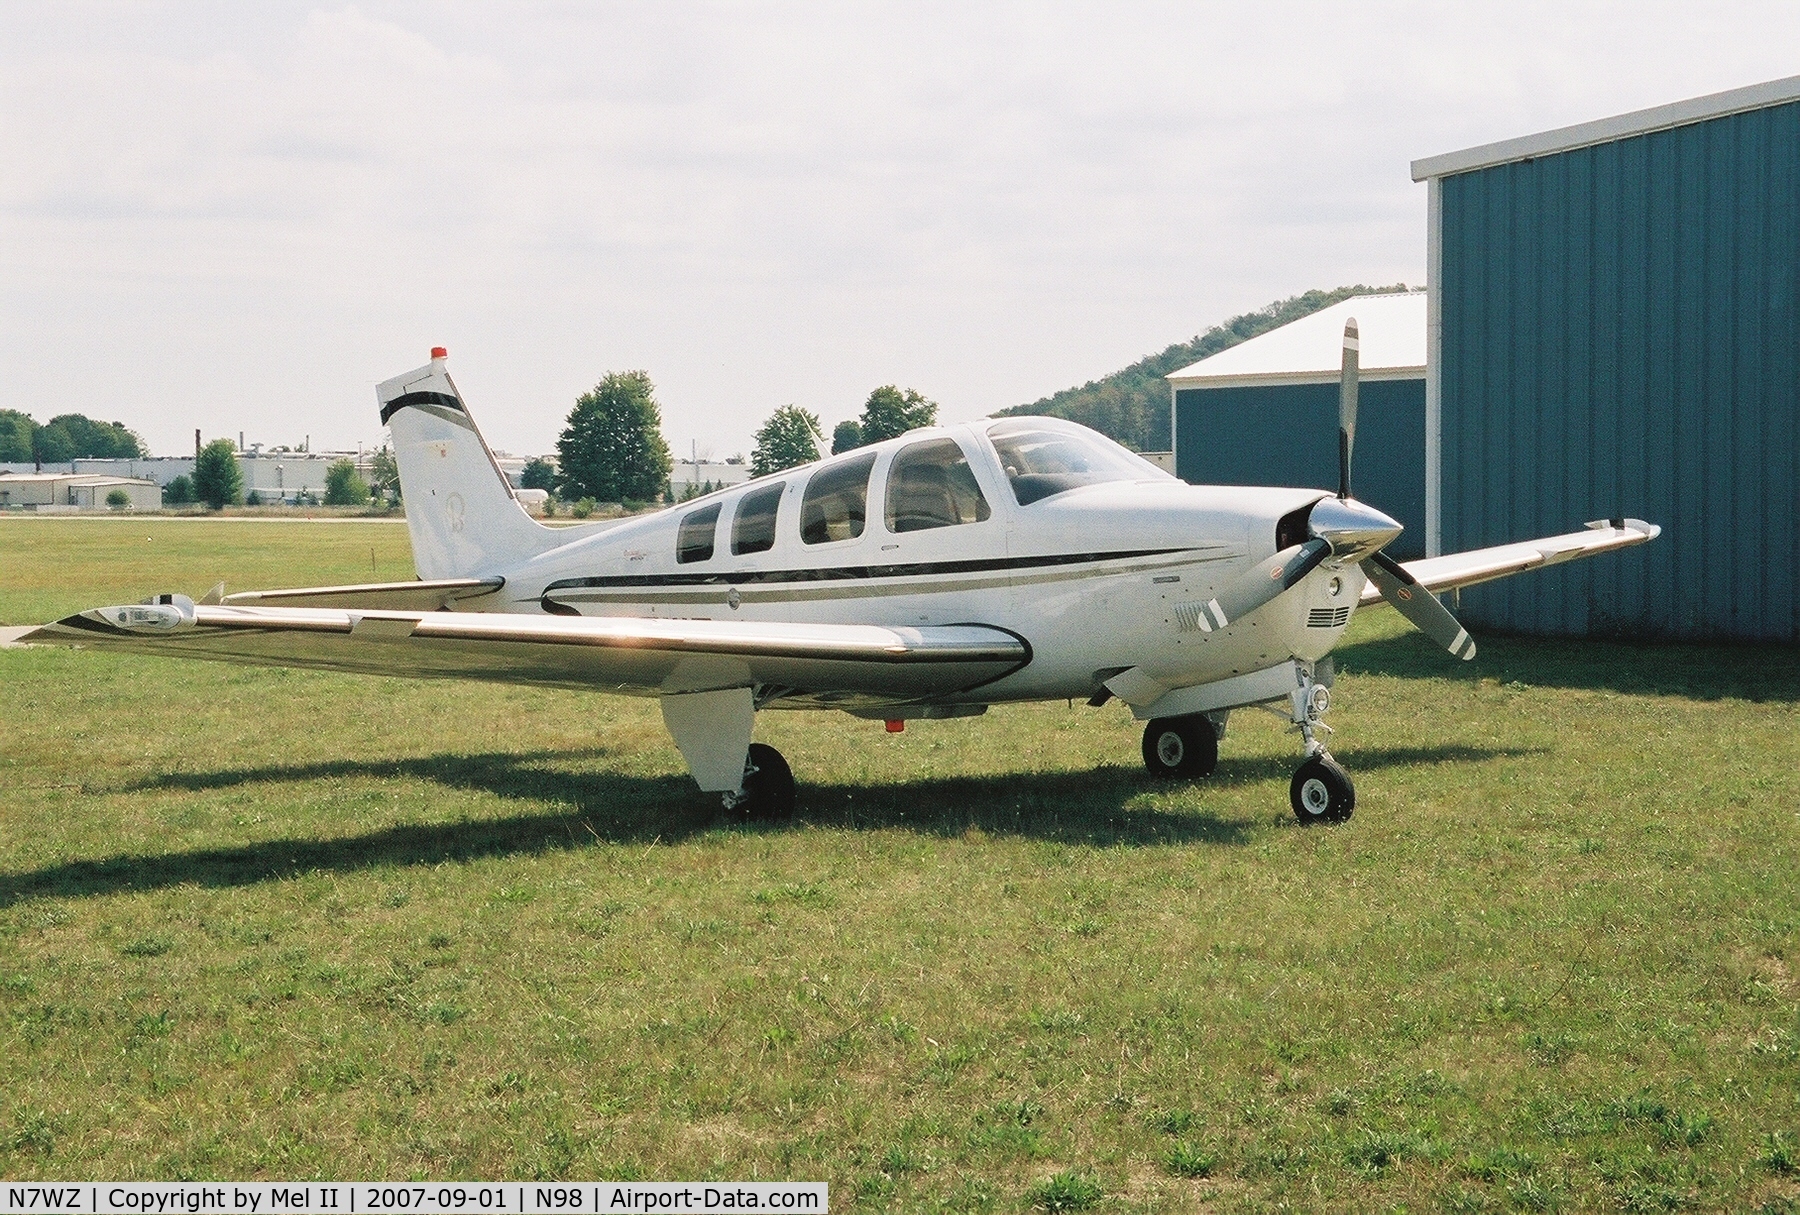 N7WZ, 2005 Raytheon Aircraft Company G36 C/N E-3637, Parked @ Boyne City Municipal Airport (N98)